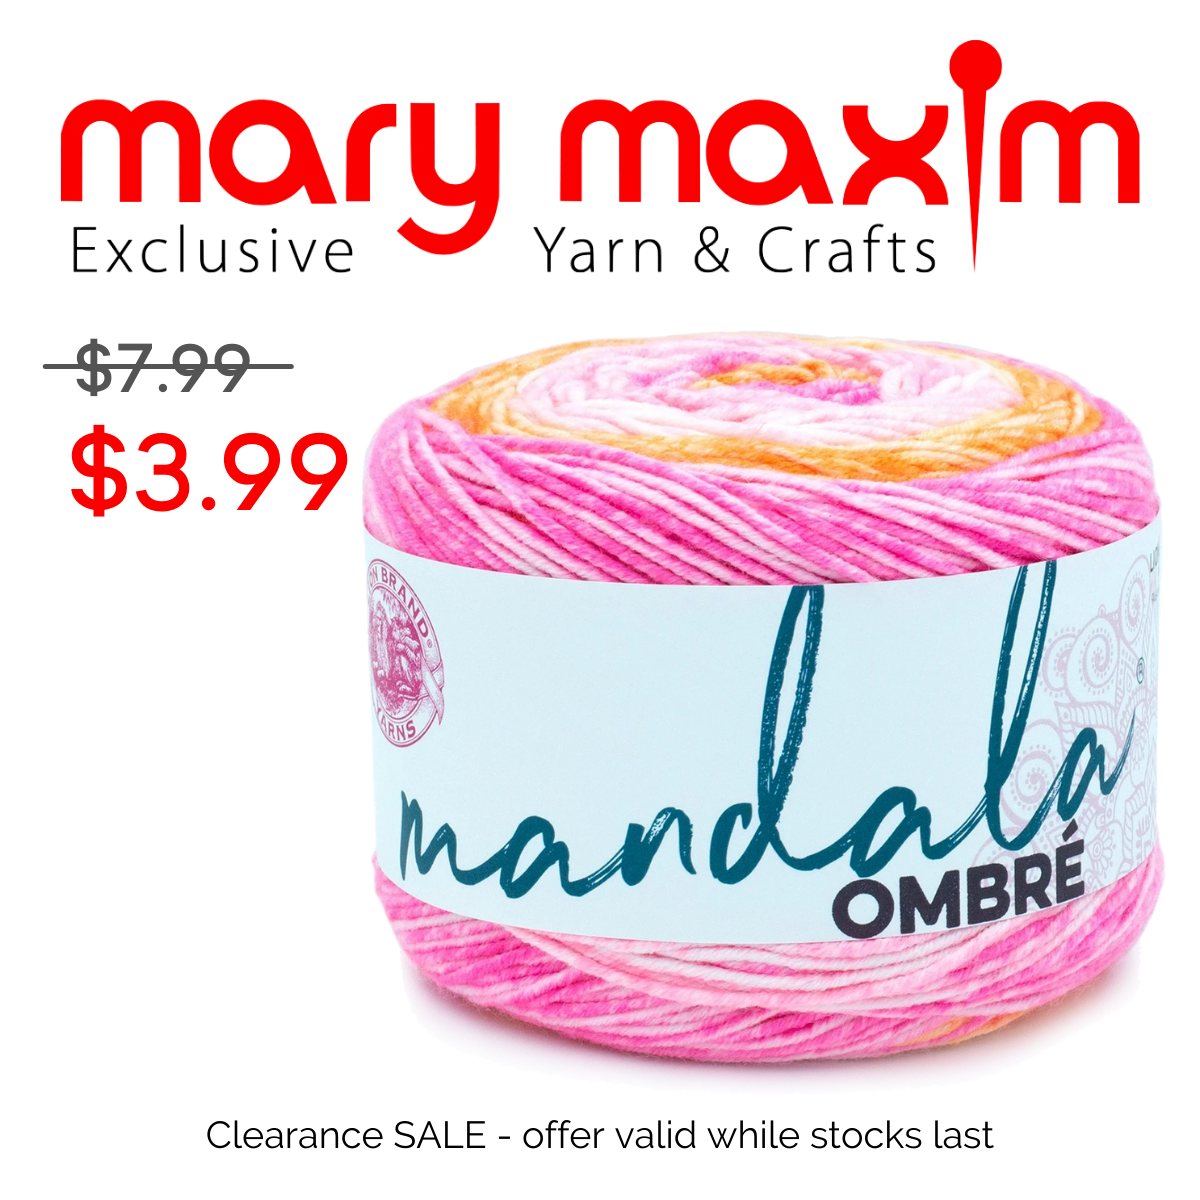 Mandala Ombre Clearance Sale | 50% off